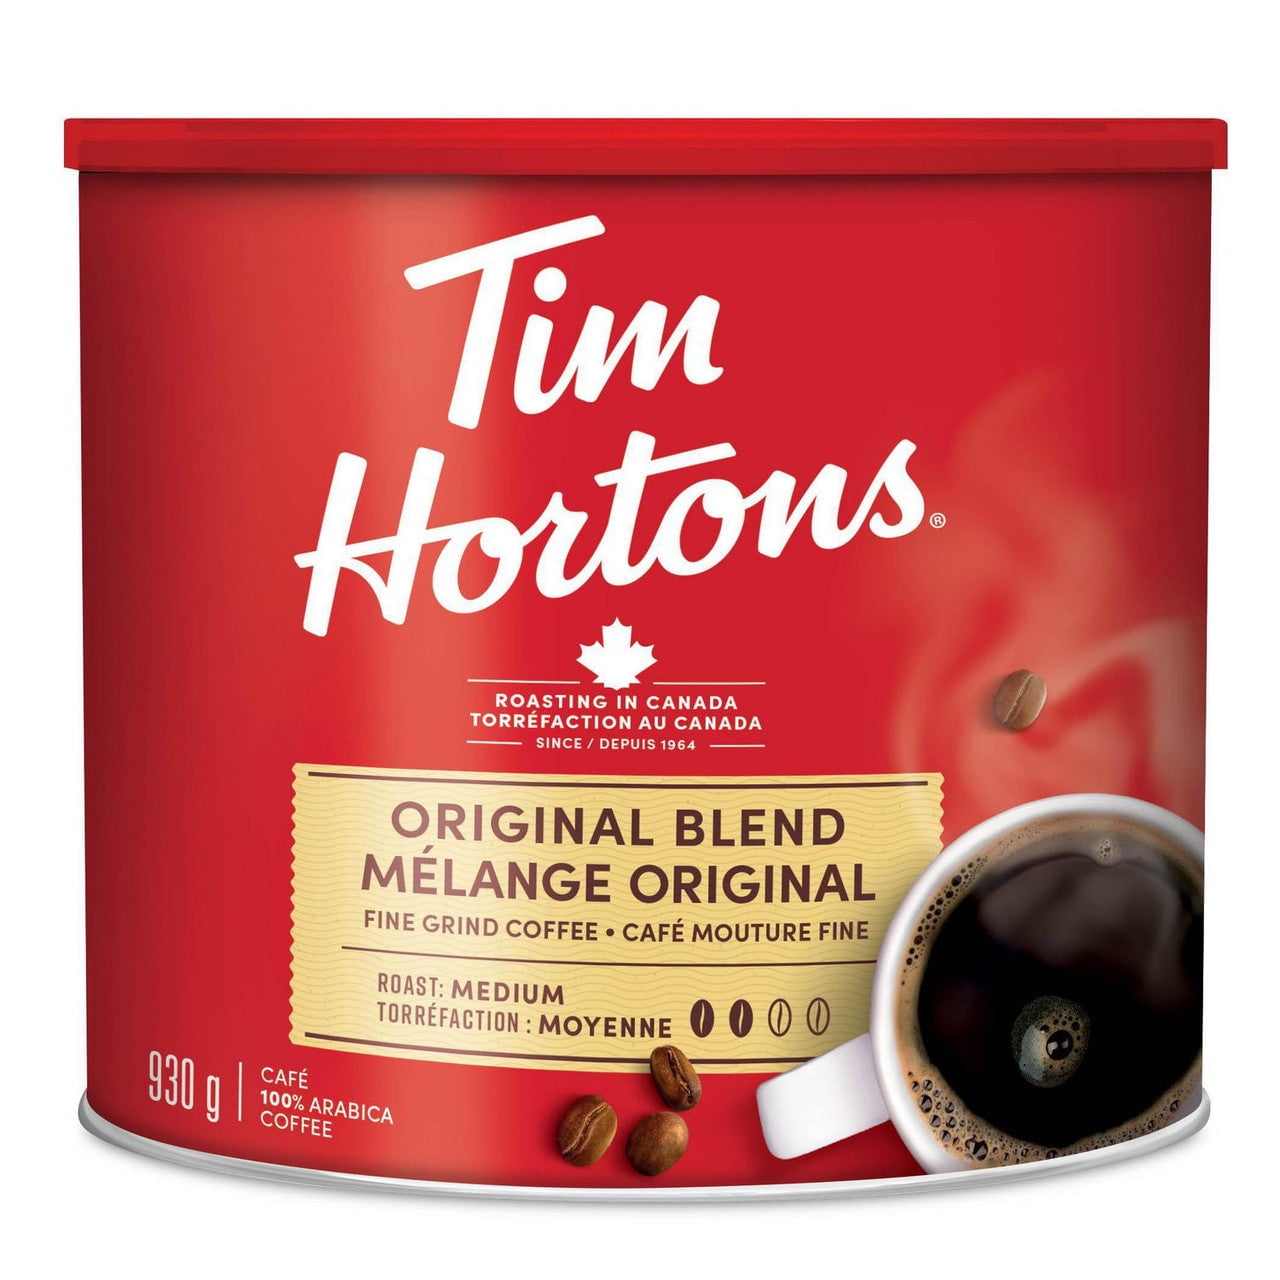 Nicotine in Tim Hortons Coffee